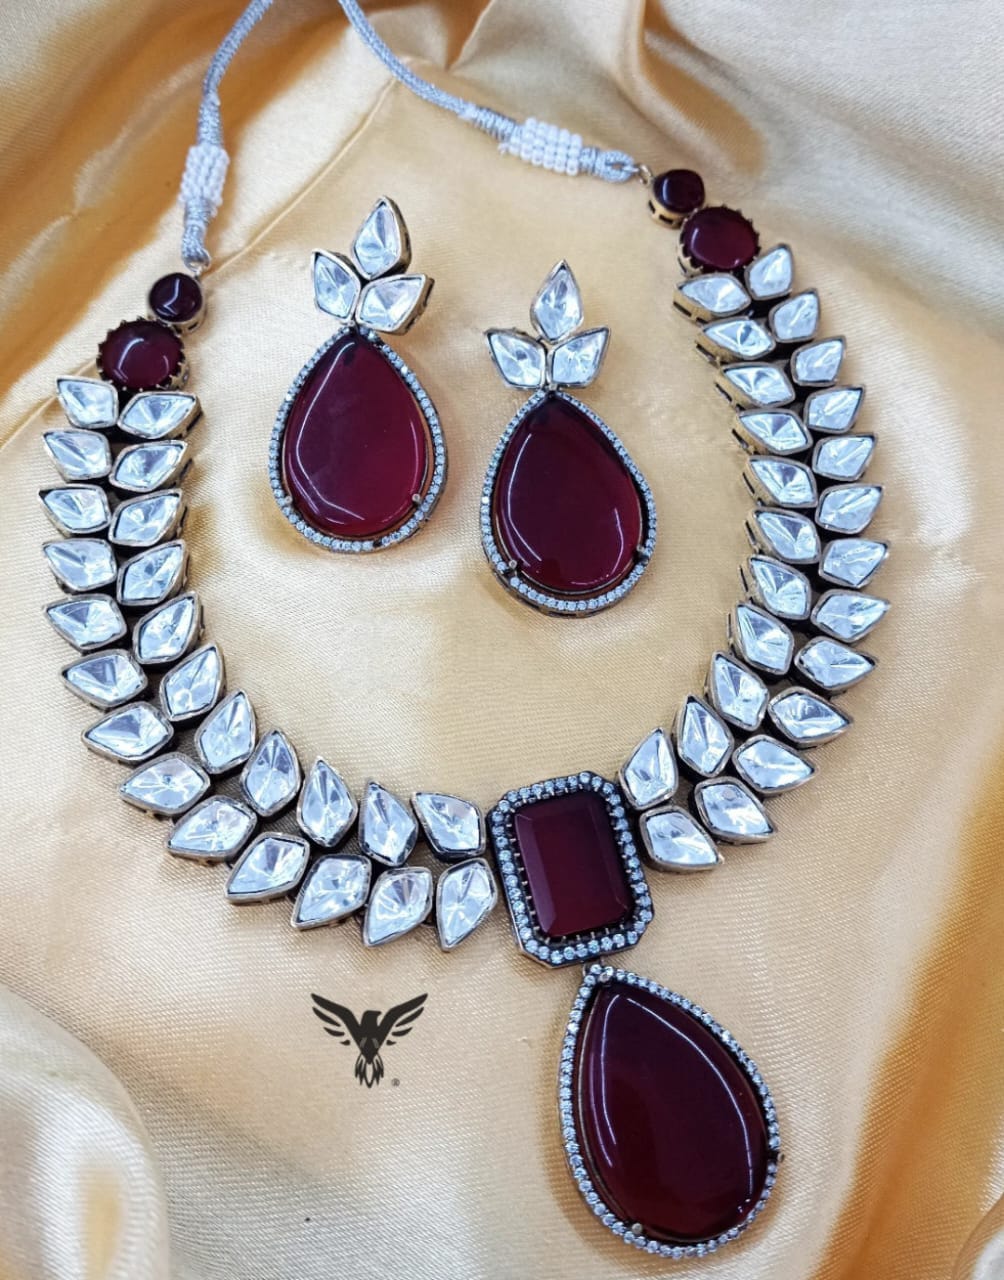 Mira kundan necklace with earrings in ruby for women